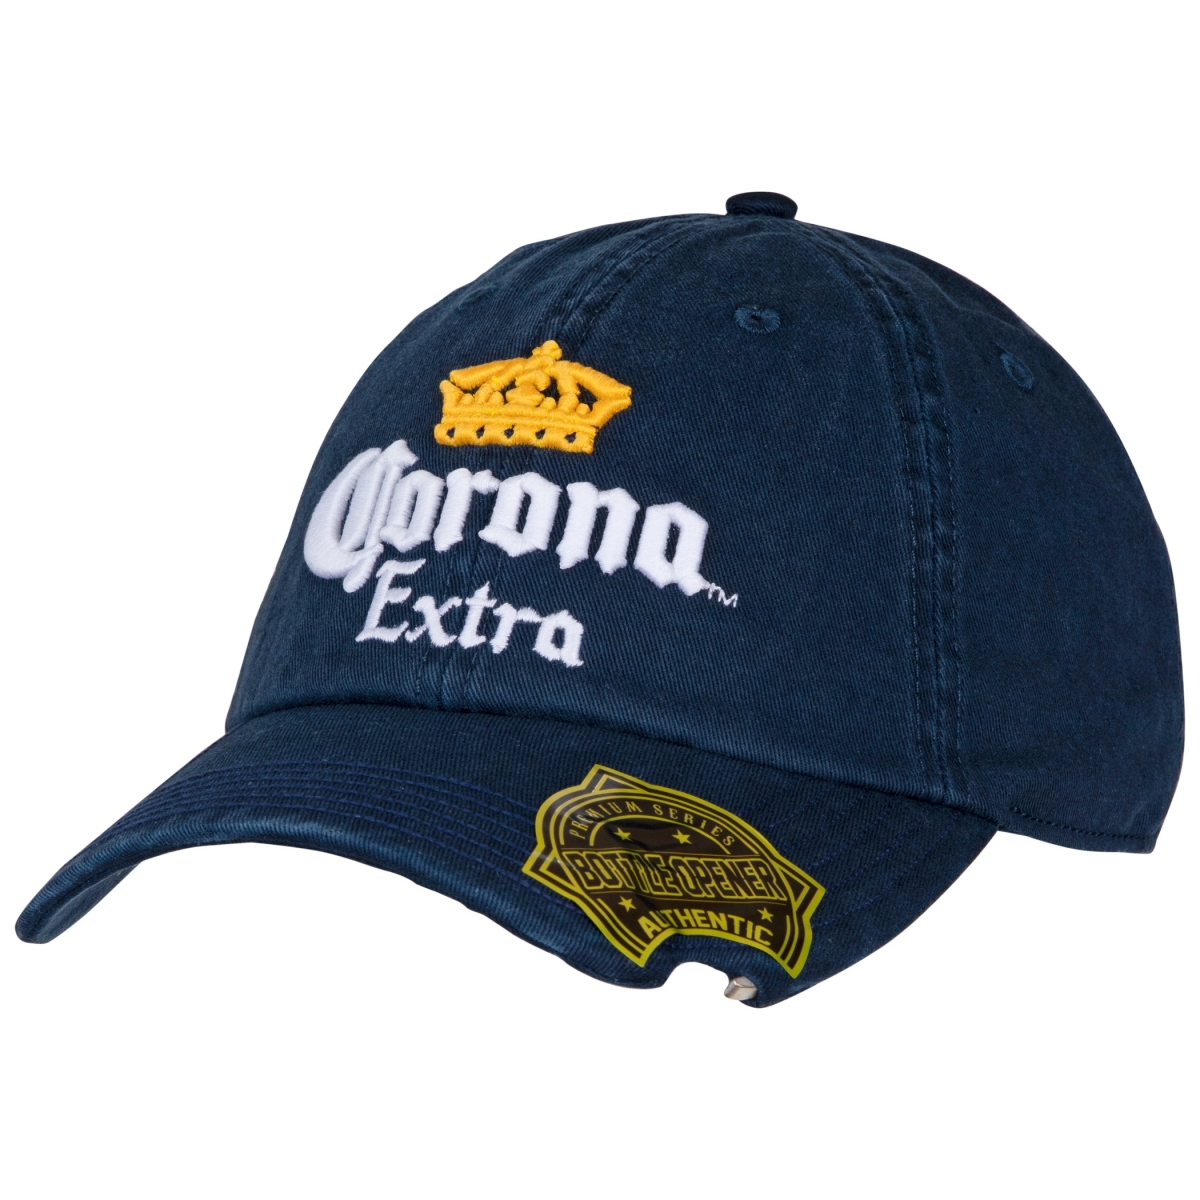 Picture of Corona Extra 802118 Bottle Opener Adjustable Snapback Hat, Navy Blue